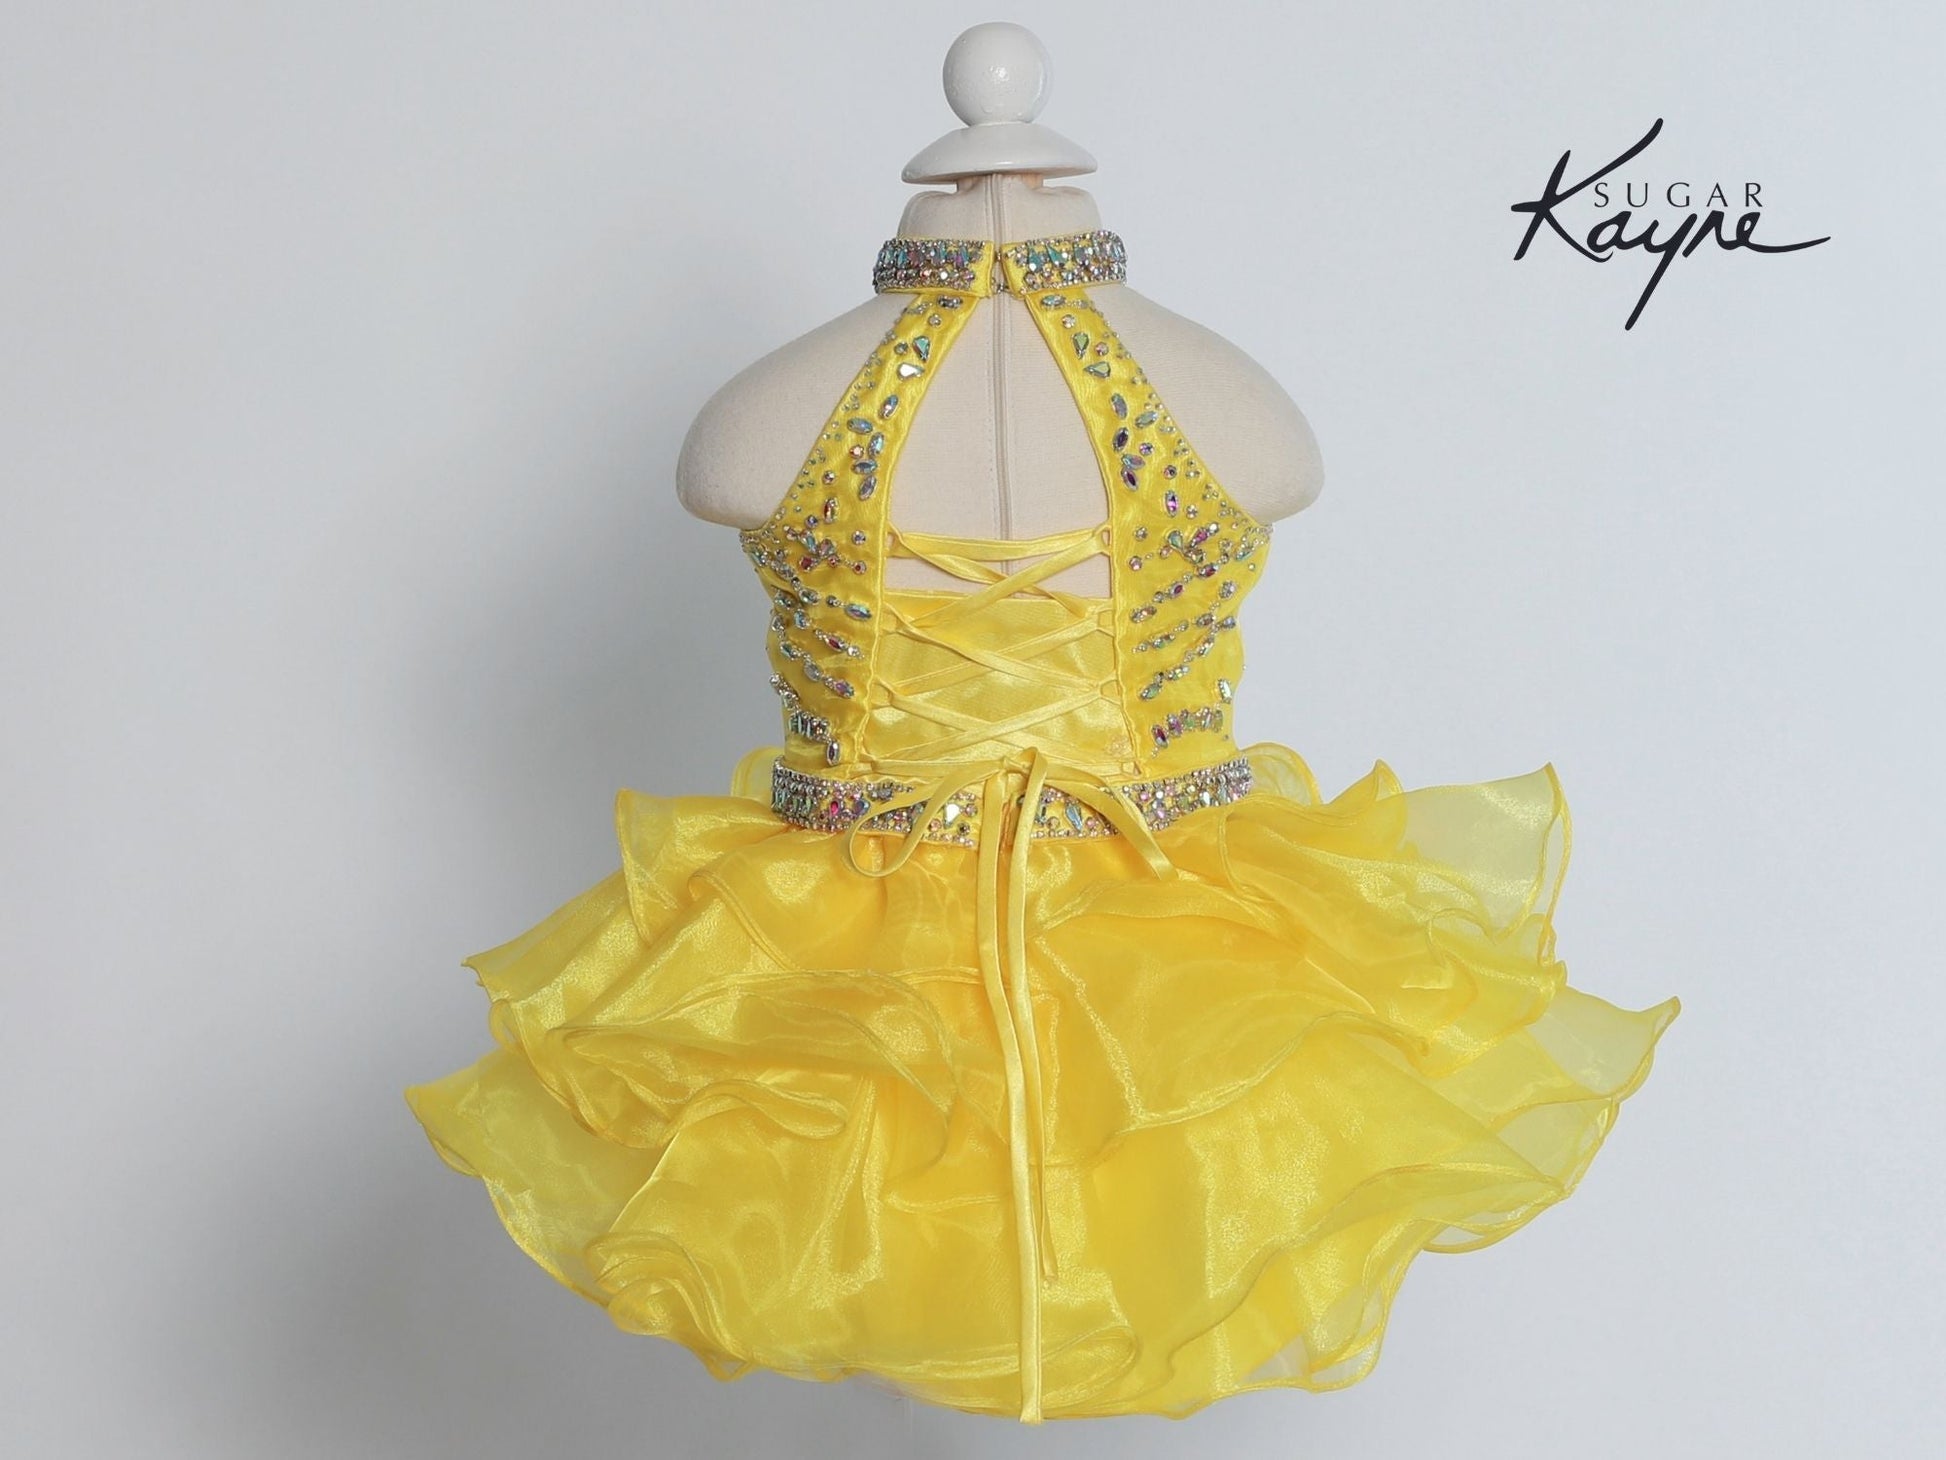 Sugar Kayne C200 Short Ruffle Girls High Neck Cupcake Corset Pageant Dress Rhinestone  Sizes: 0M, 6M, 12M, 18M, 24M, 2T, 3T, 4T, 5T, 6T  Colors: Aqua, Canary Yellow, Neon Pink